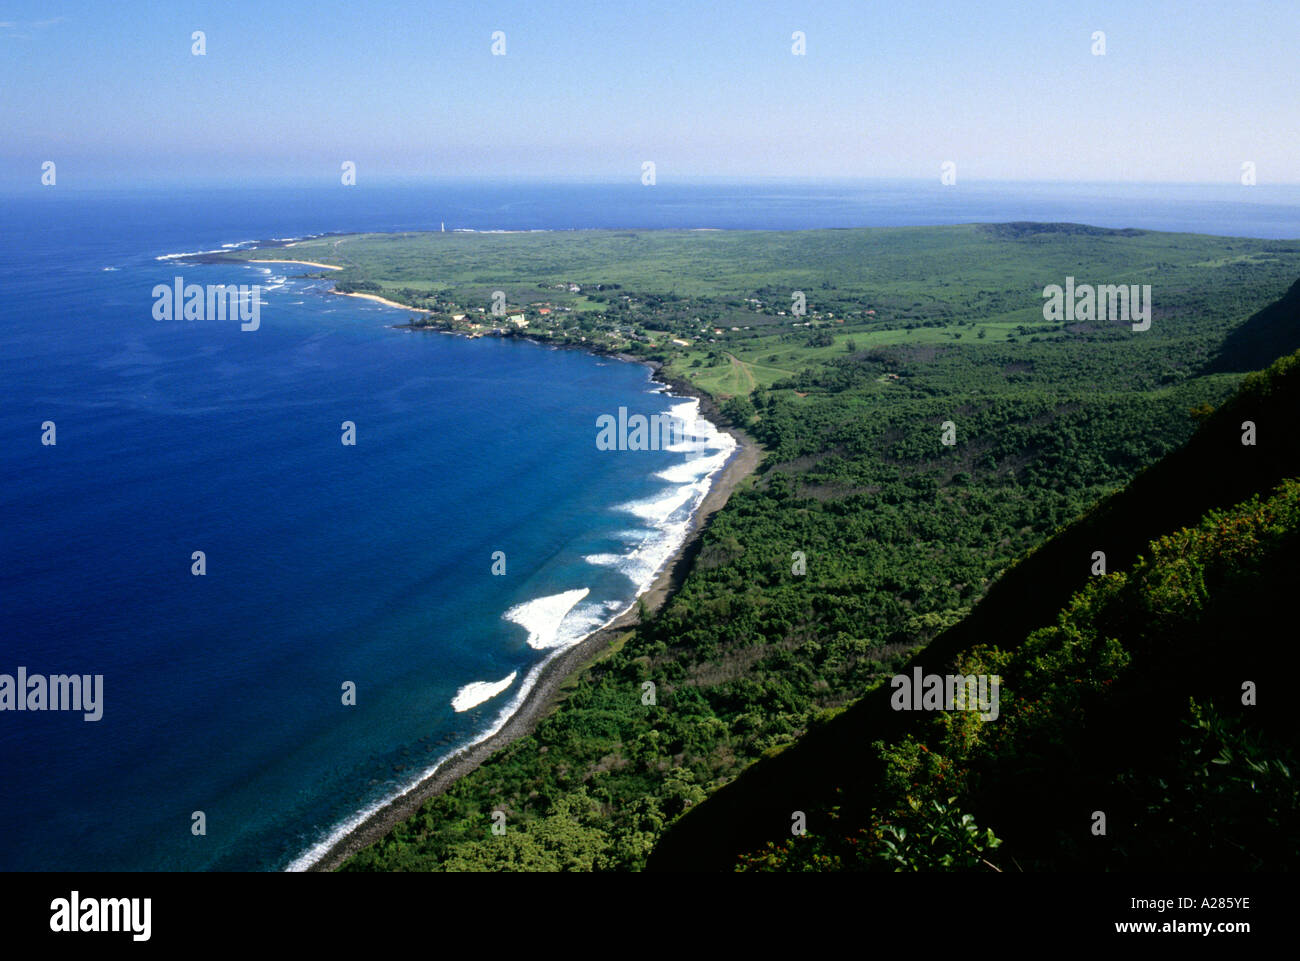 The Kalaupapa peninsula on Molokai, Hawaii. Stock Photo